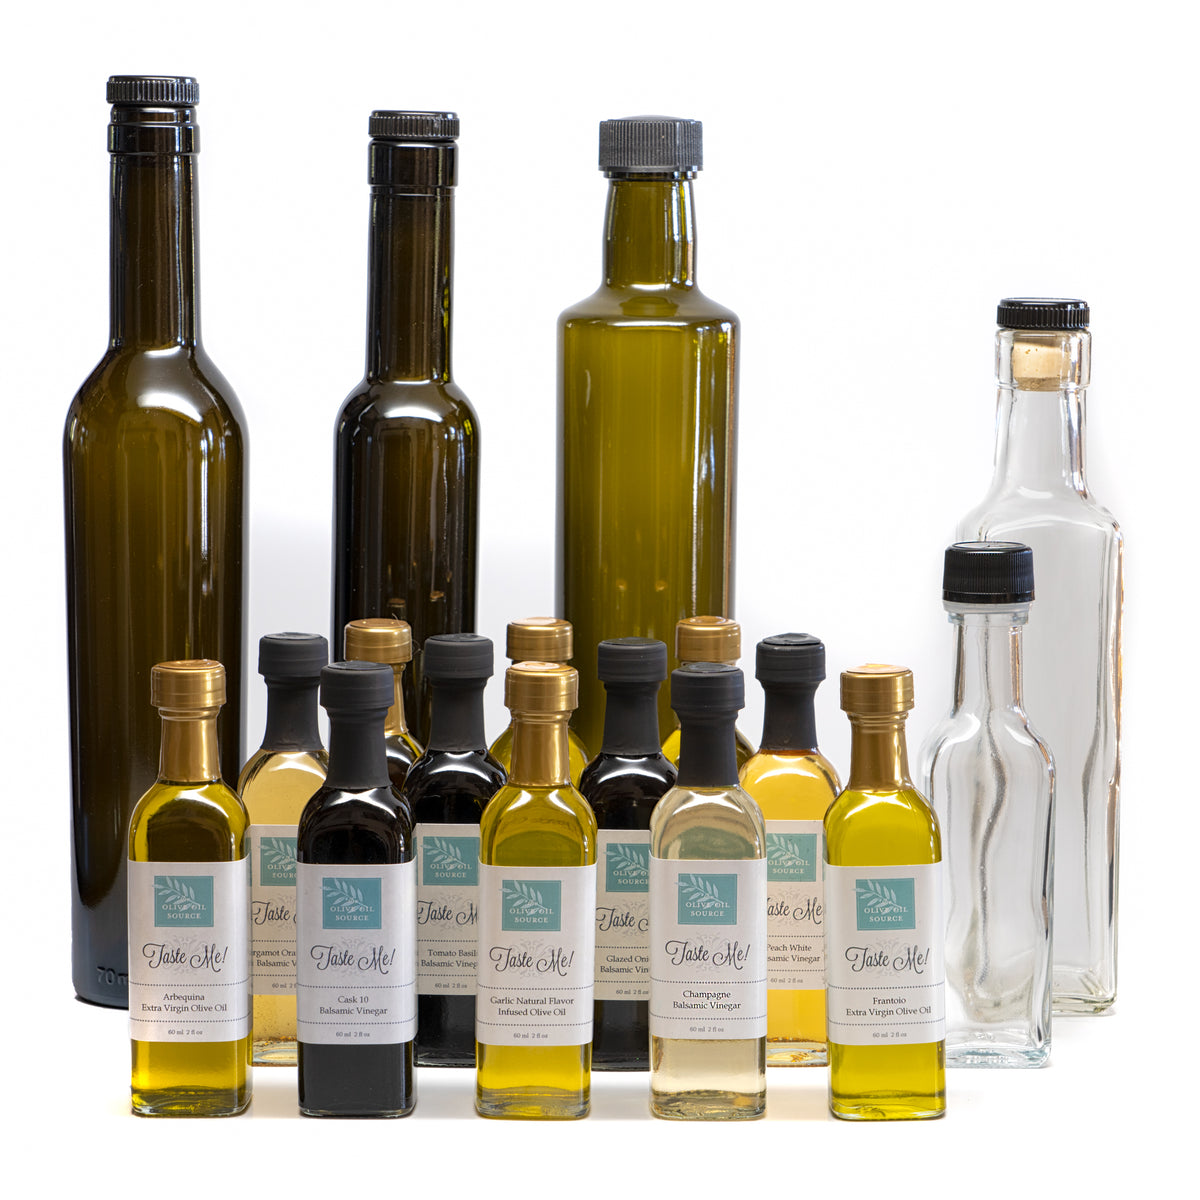 Bulk & Wholesale Olive Oil